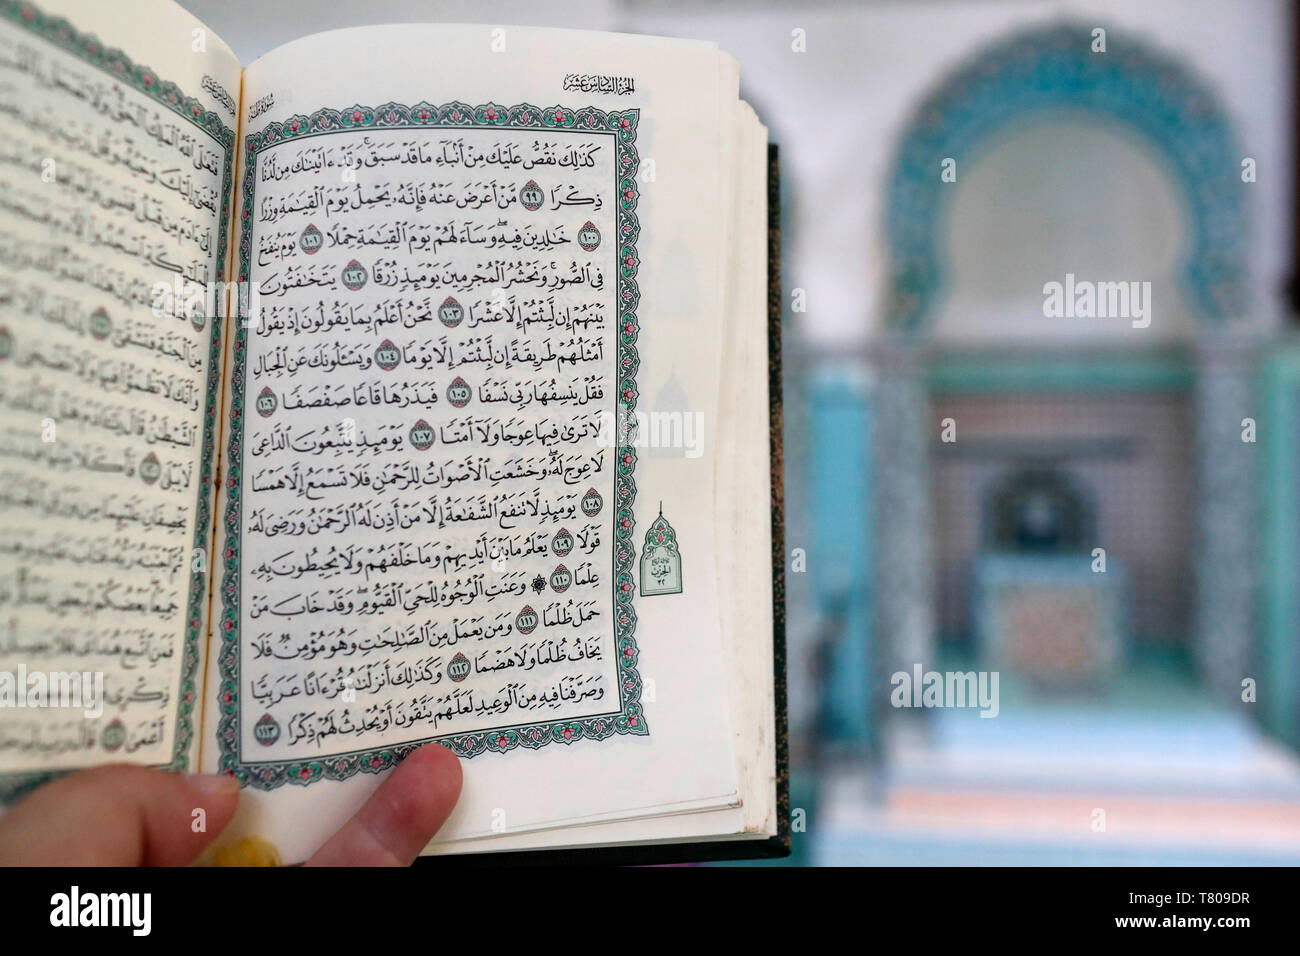 Mezquita de Mubarak, la lectura de un hombre musulmán árabe Santo Corán (Corán), Chau Doc, Vietnam, Indochina, en el sudeste de Asia, Asia Foto de stock